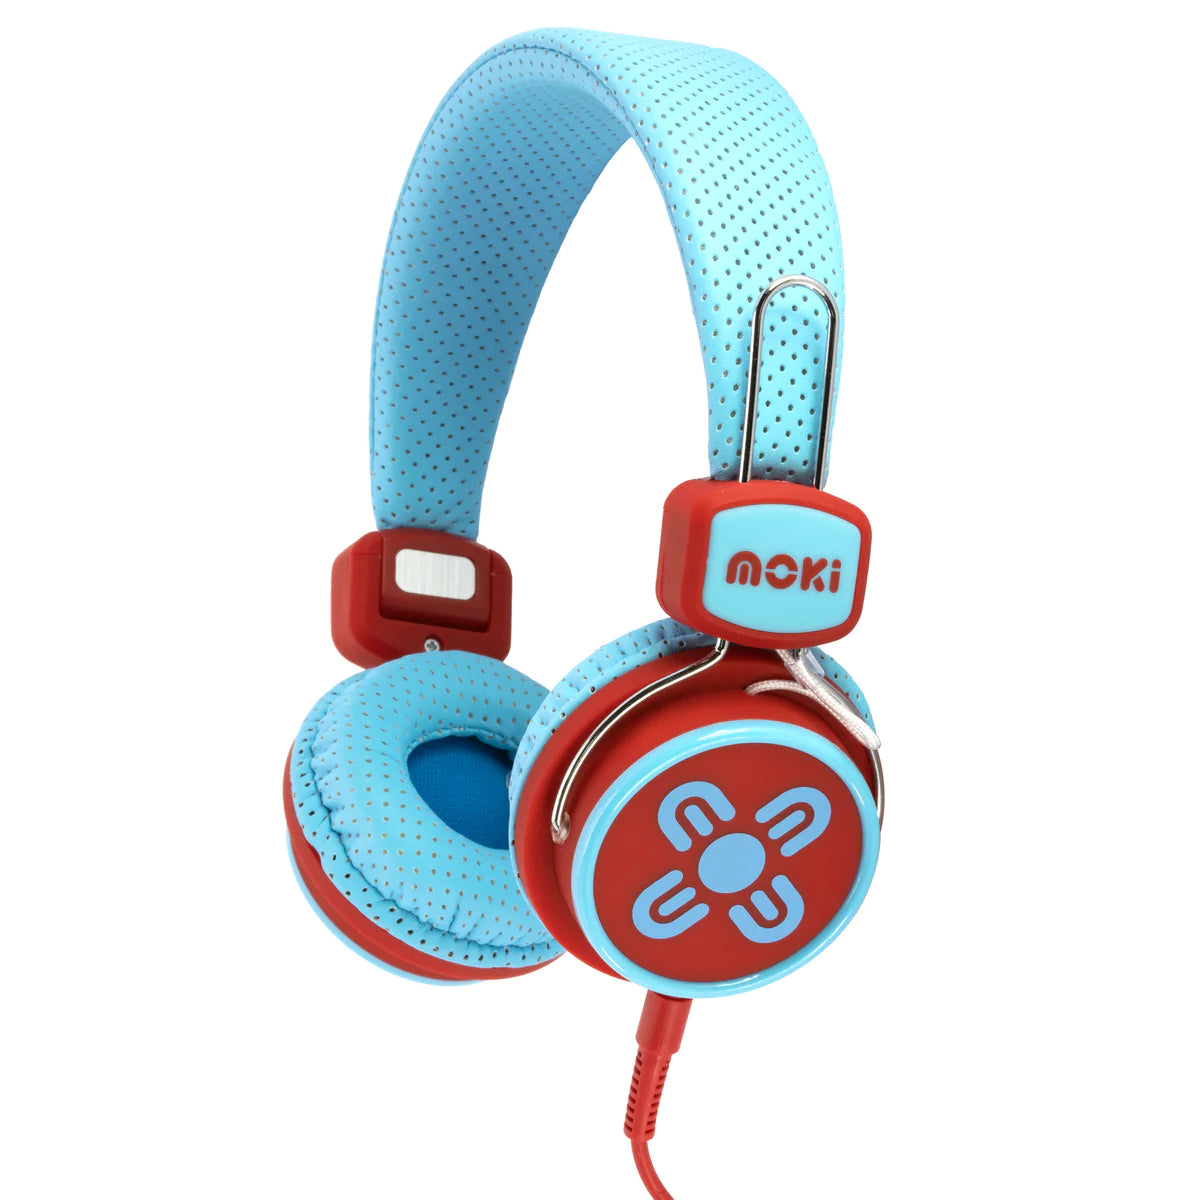 Moki Kids Safe Headphones Blue and Red